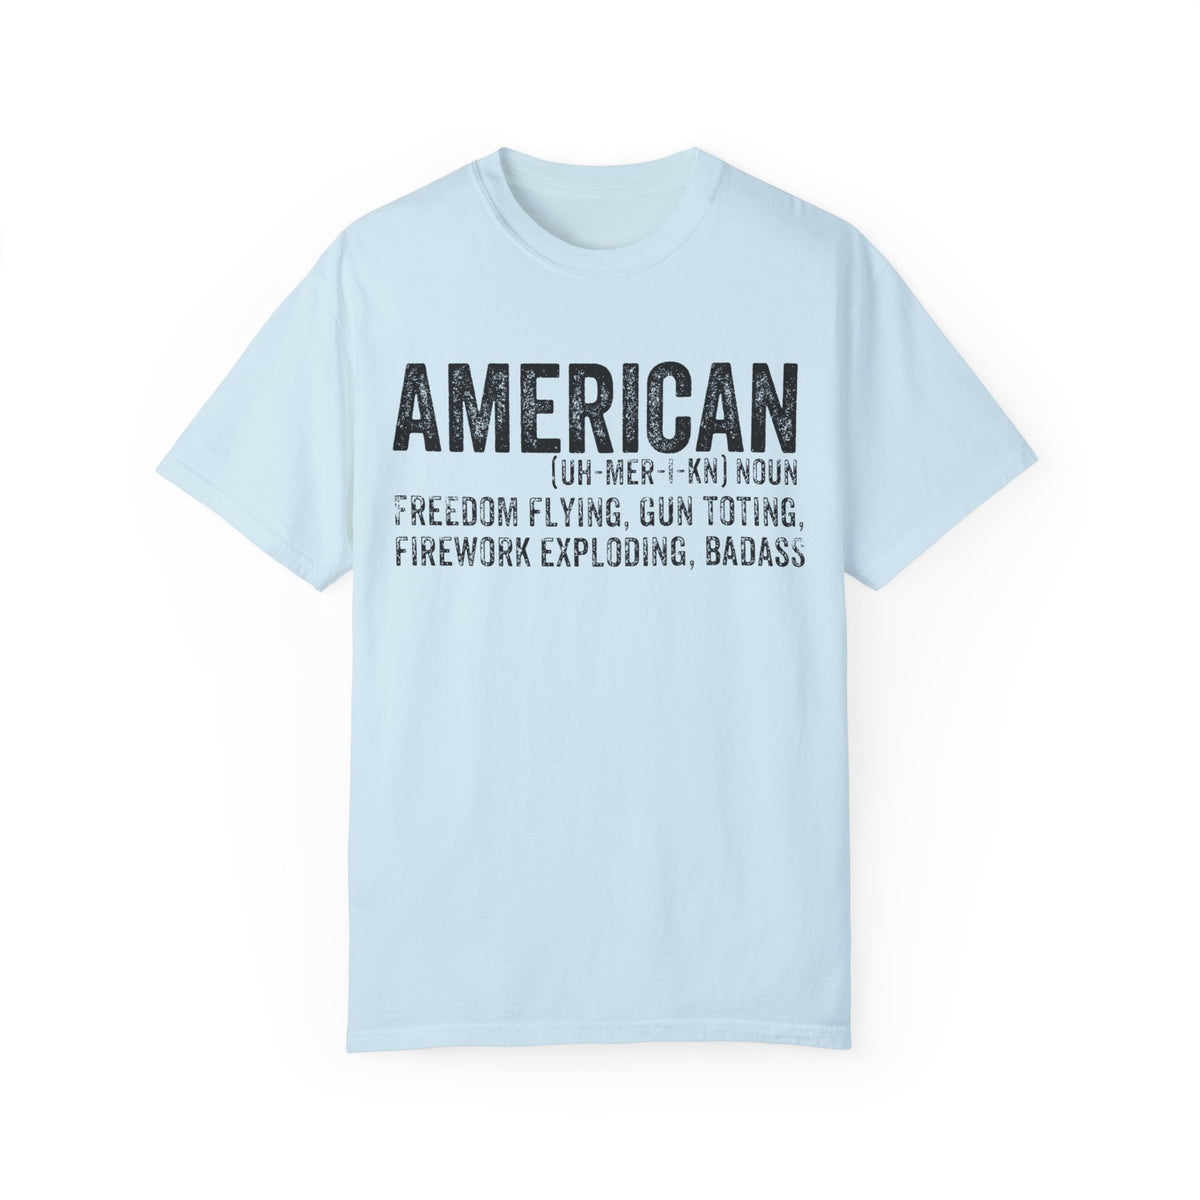 American Comfort Colors Unisex Garment-Dyed T-shirt